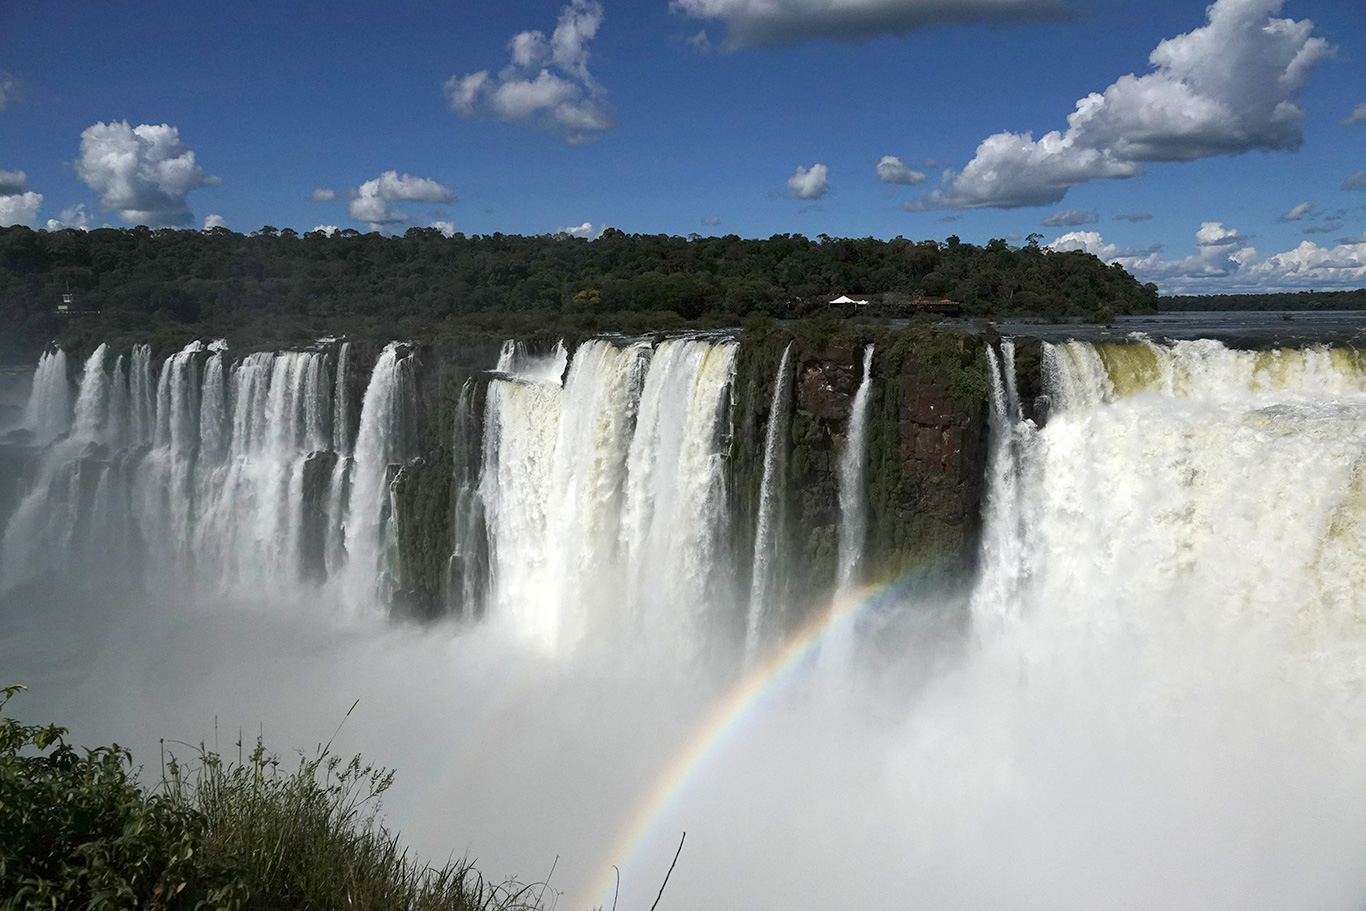  Iguazú Falls, Parque Nacional Iguazú, Argentina.